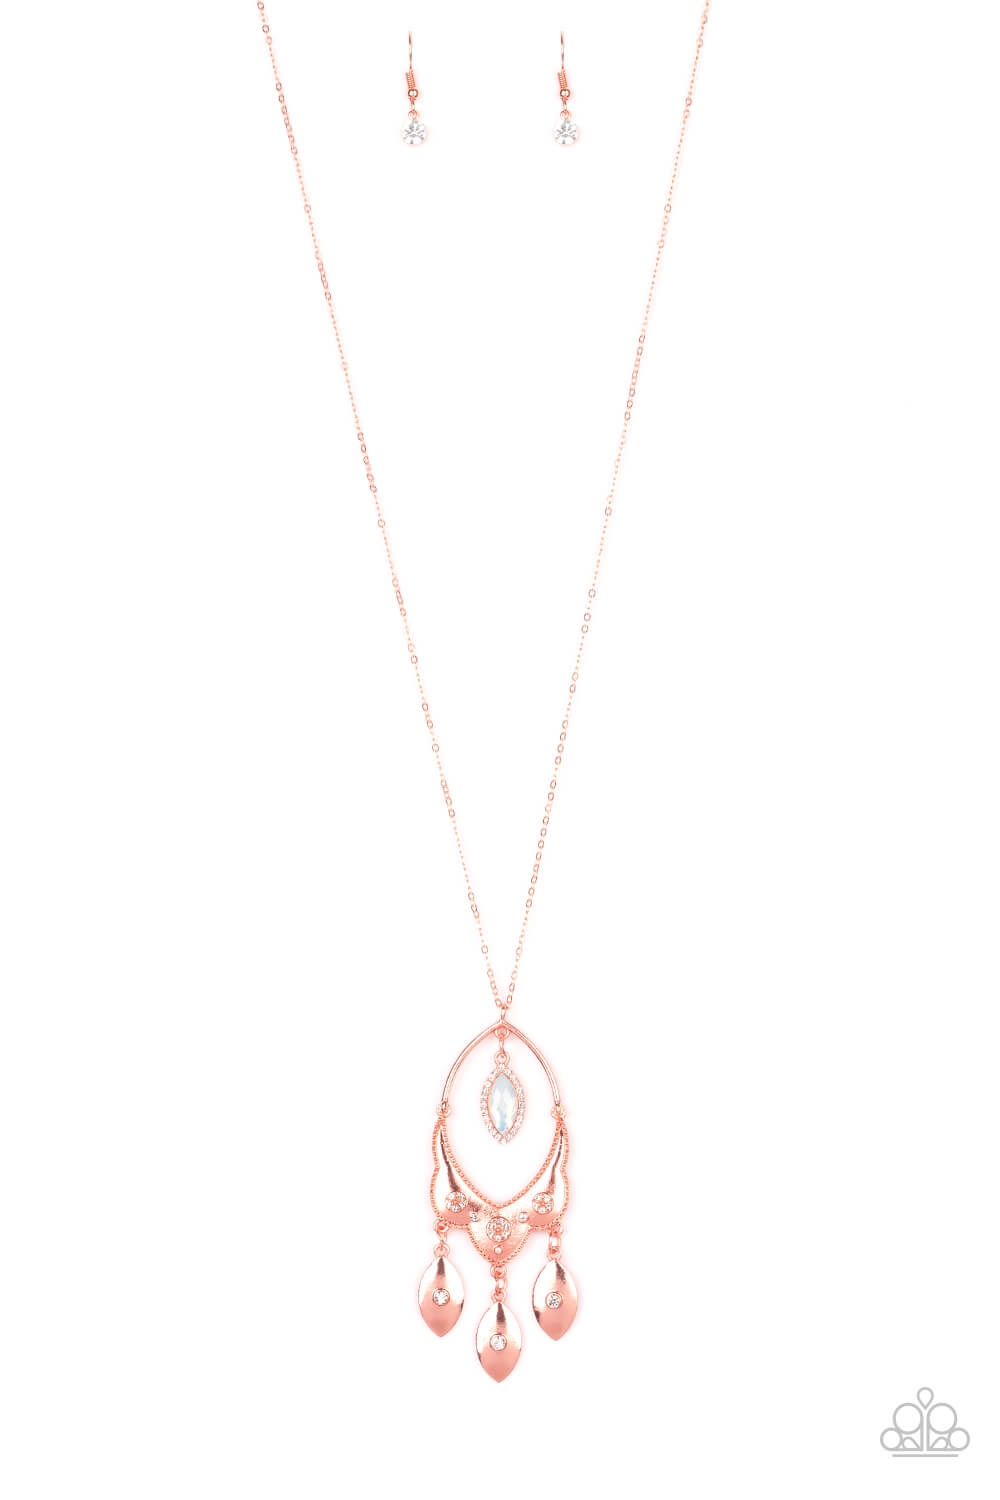 Royal Iridescence - Copper Necklace Set - Princess Glam Shop